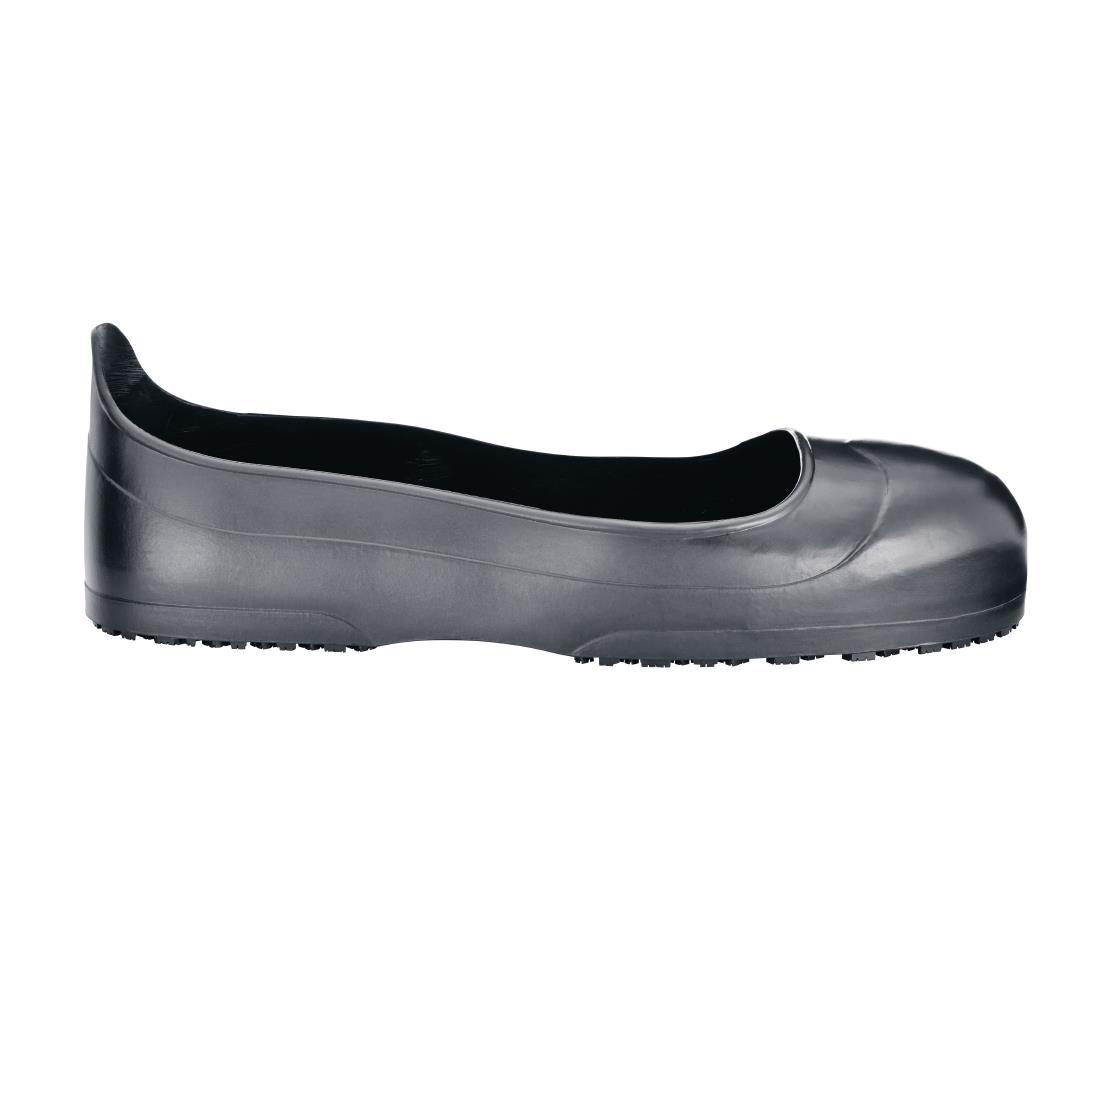 Shoes for Crews Crewguard Overshoes Steel Toe Cap Size L - BB614-L  - 1